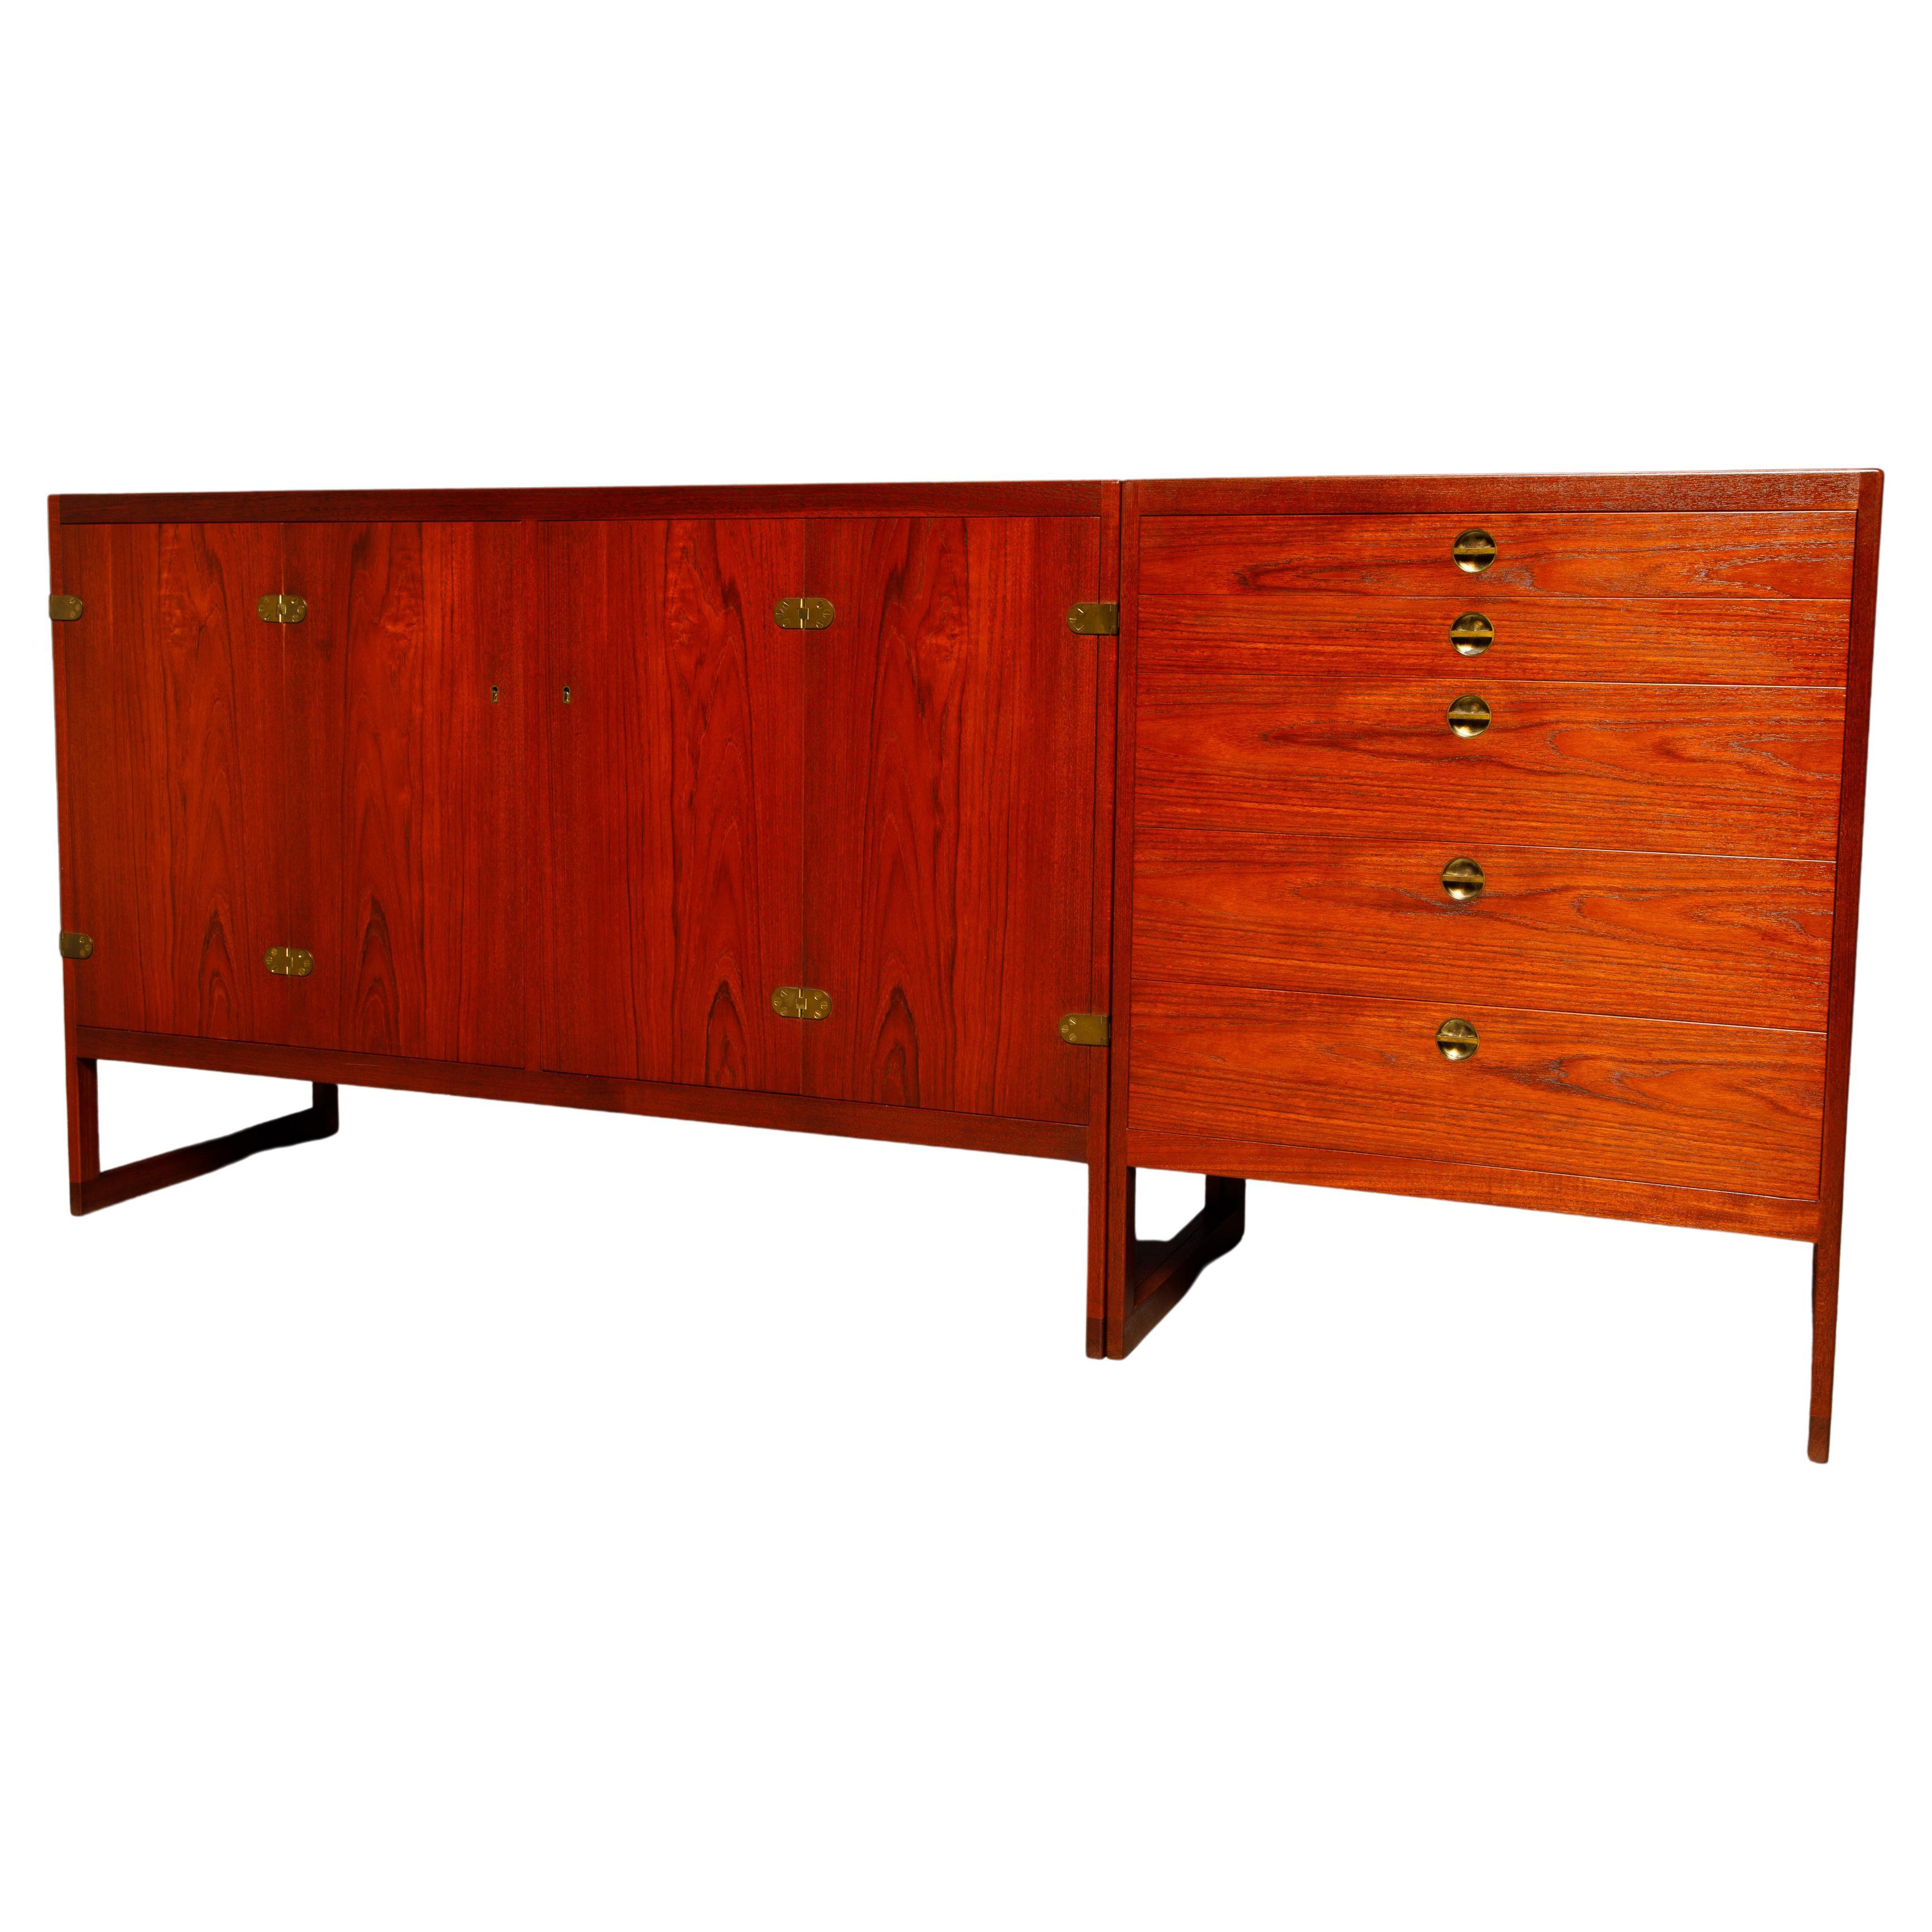 Børge Mogensen for P. Lauritsen & Son Sideboard Cabinets, 1950s Denmark, Signed